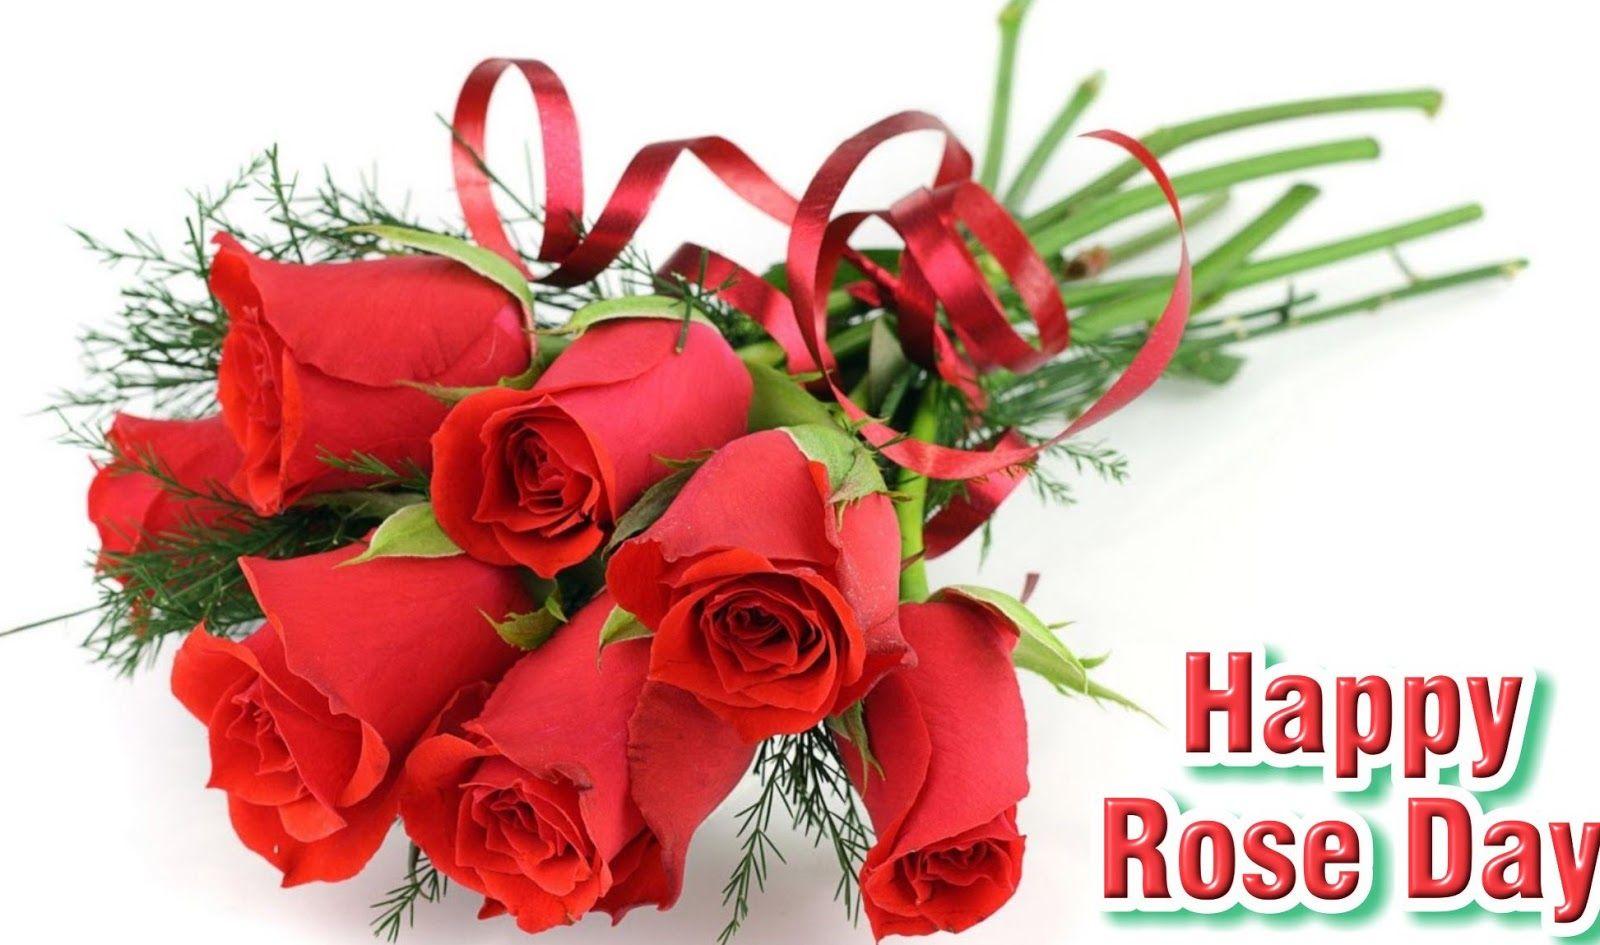 Happy Rose Day 2018 Image, Quotes, Wishes & Shayari